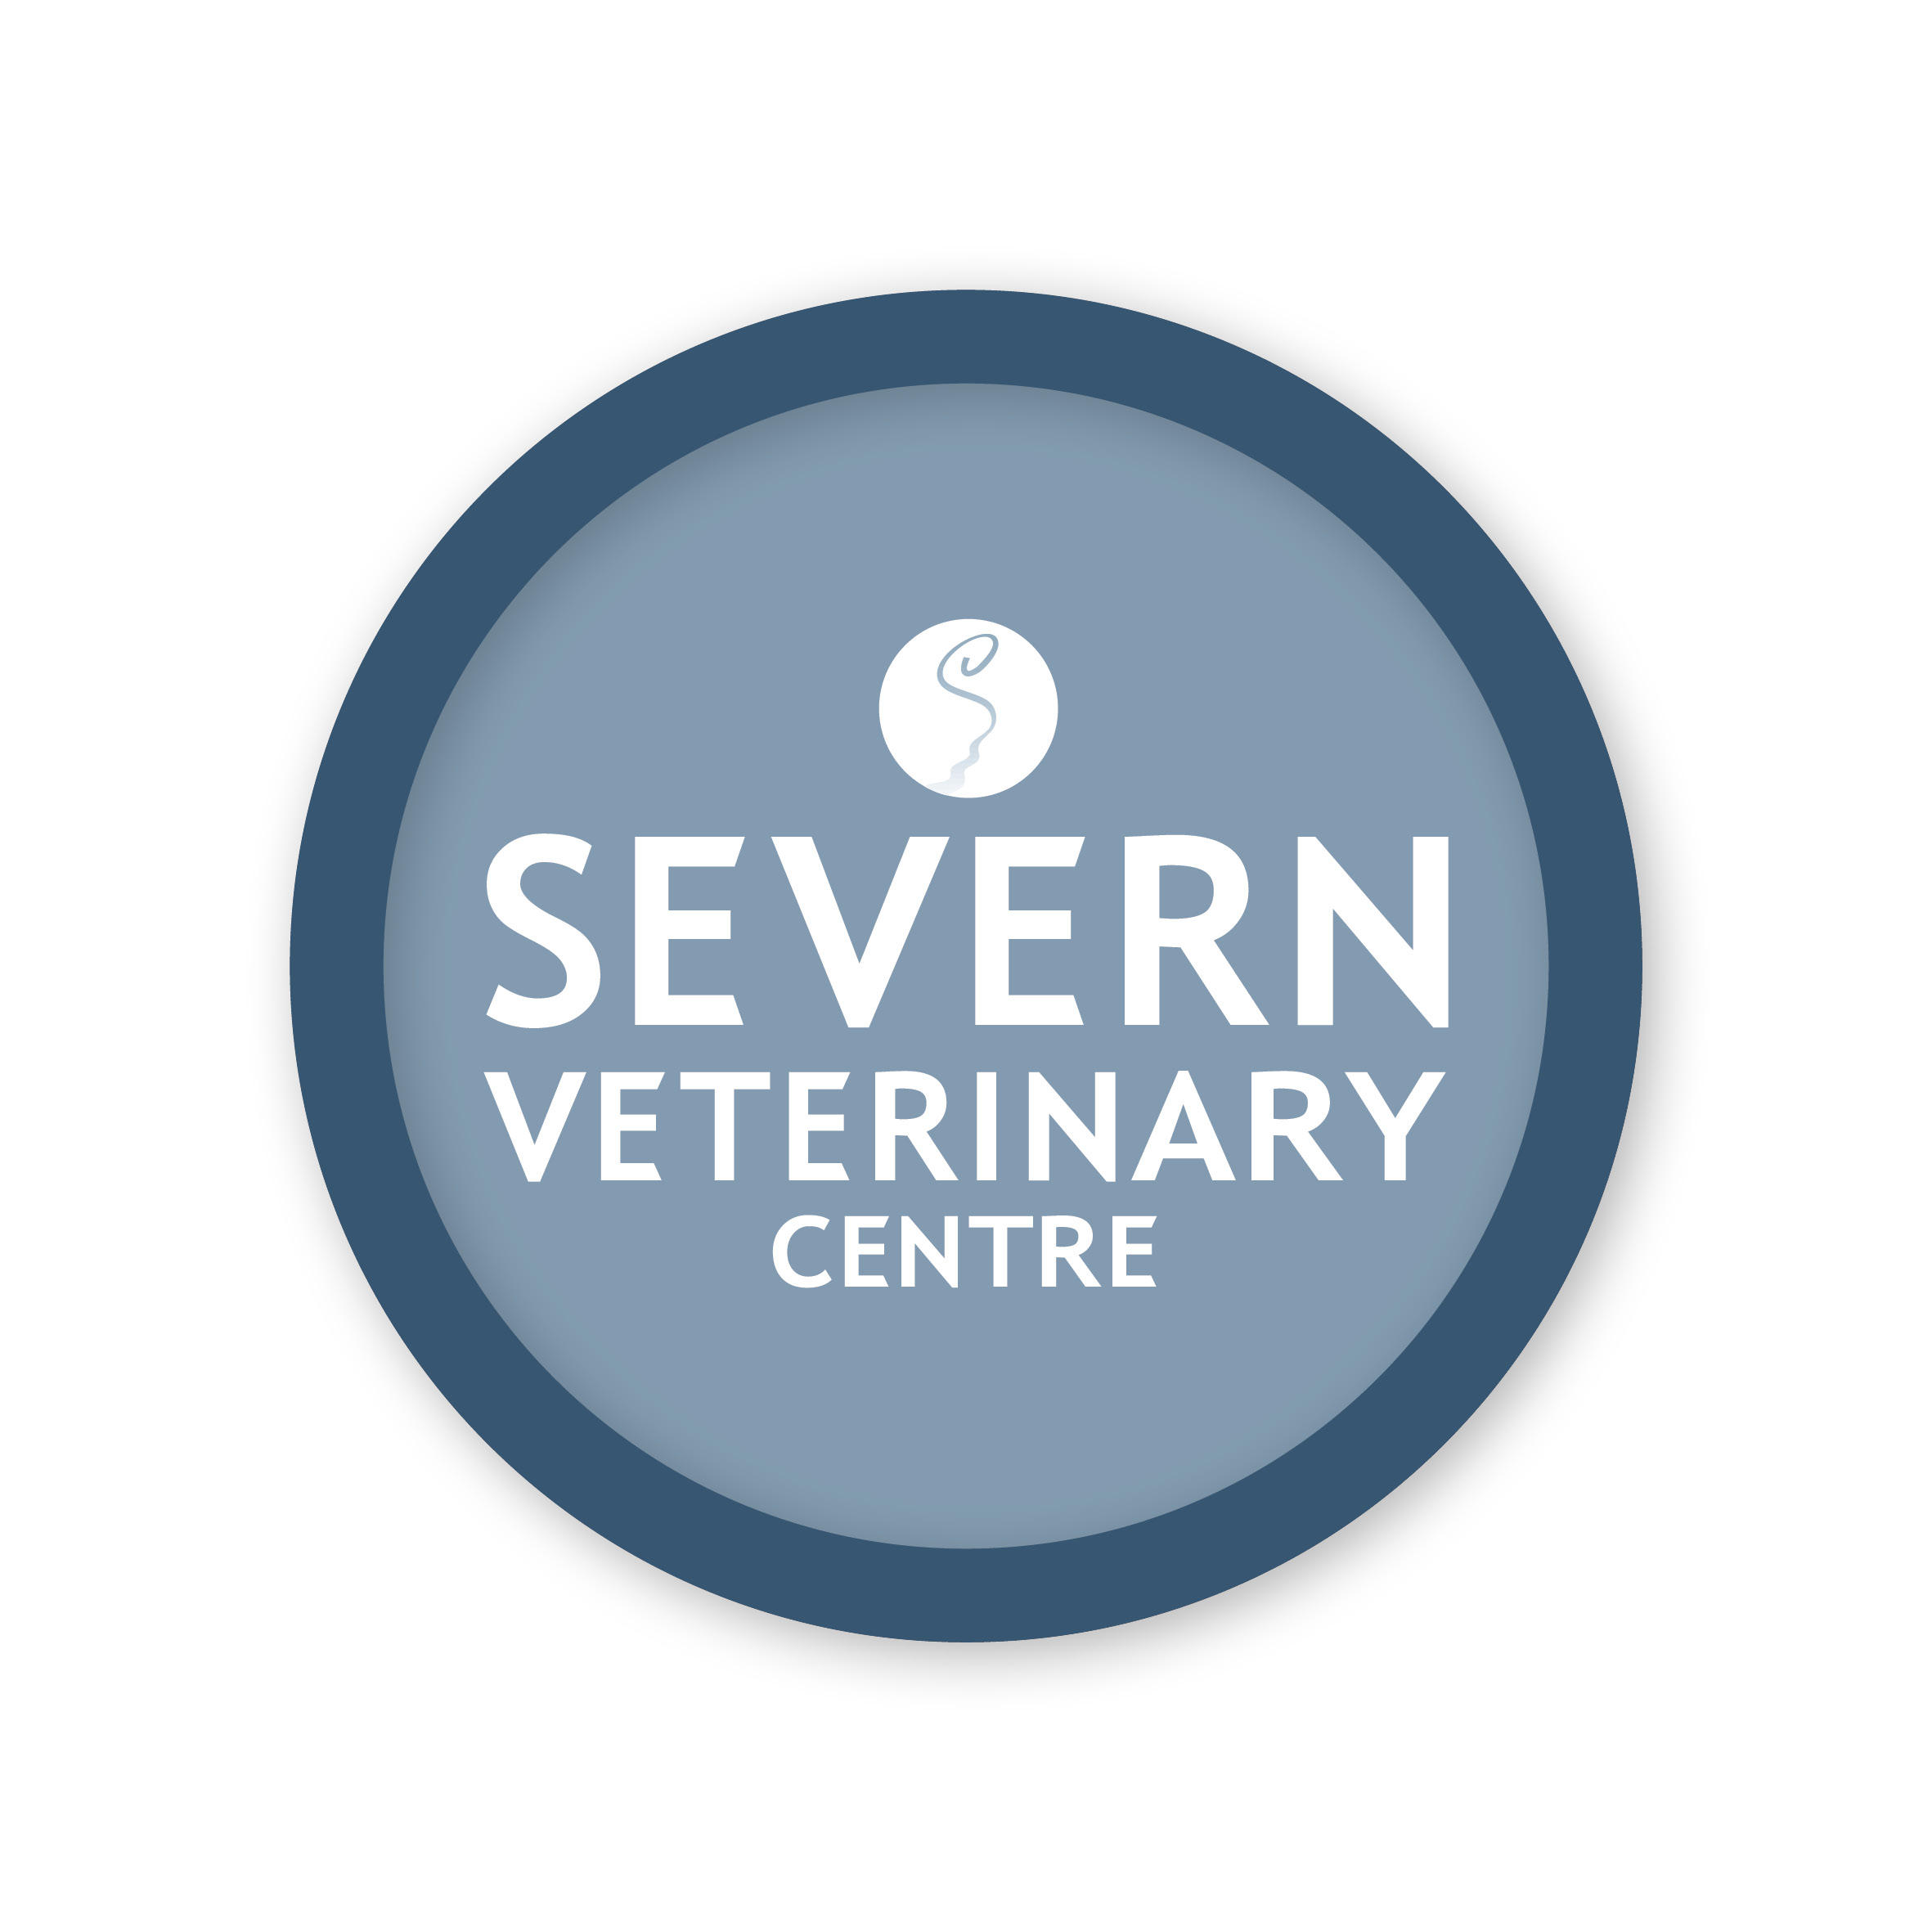 Severn Veterinary Centre, Tybridge House Worcester 01905 421296